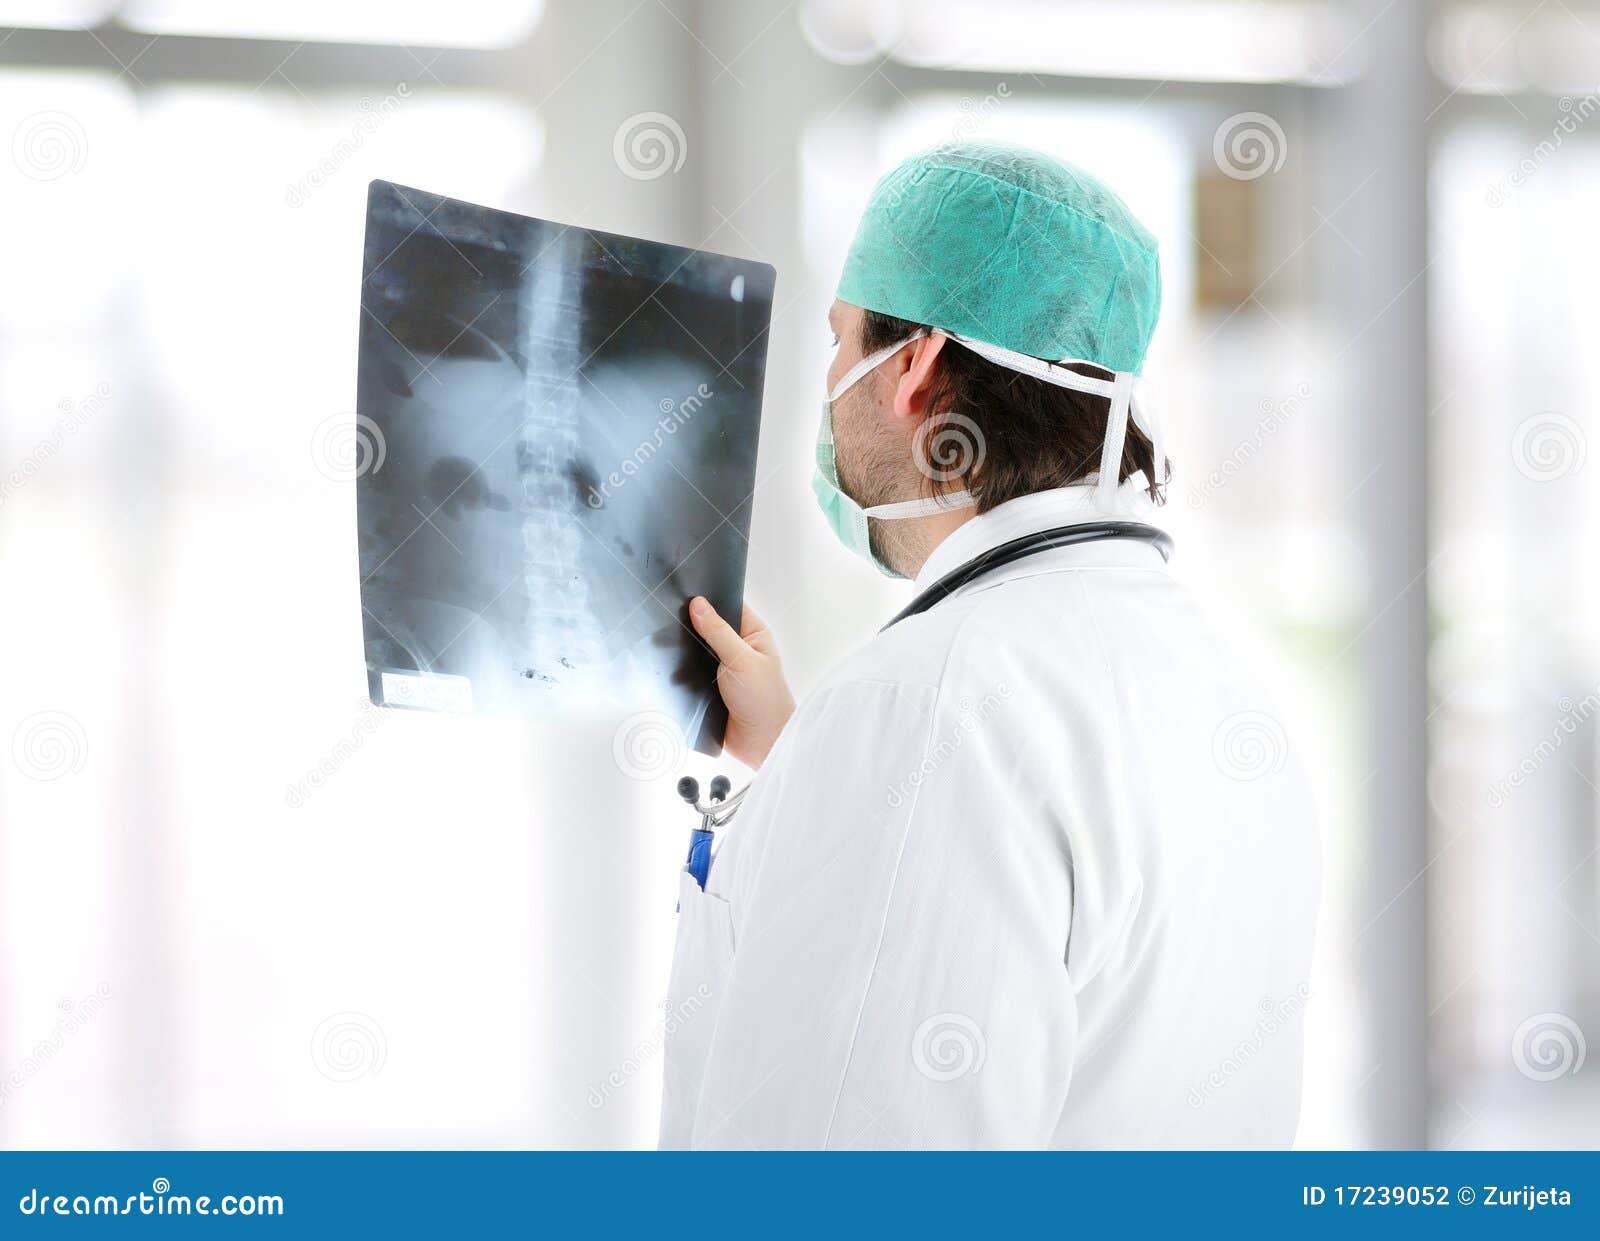 medical doctor analysing x-ray image handheld